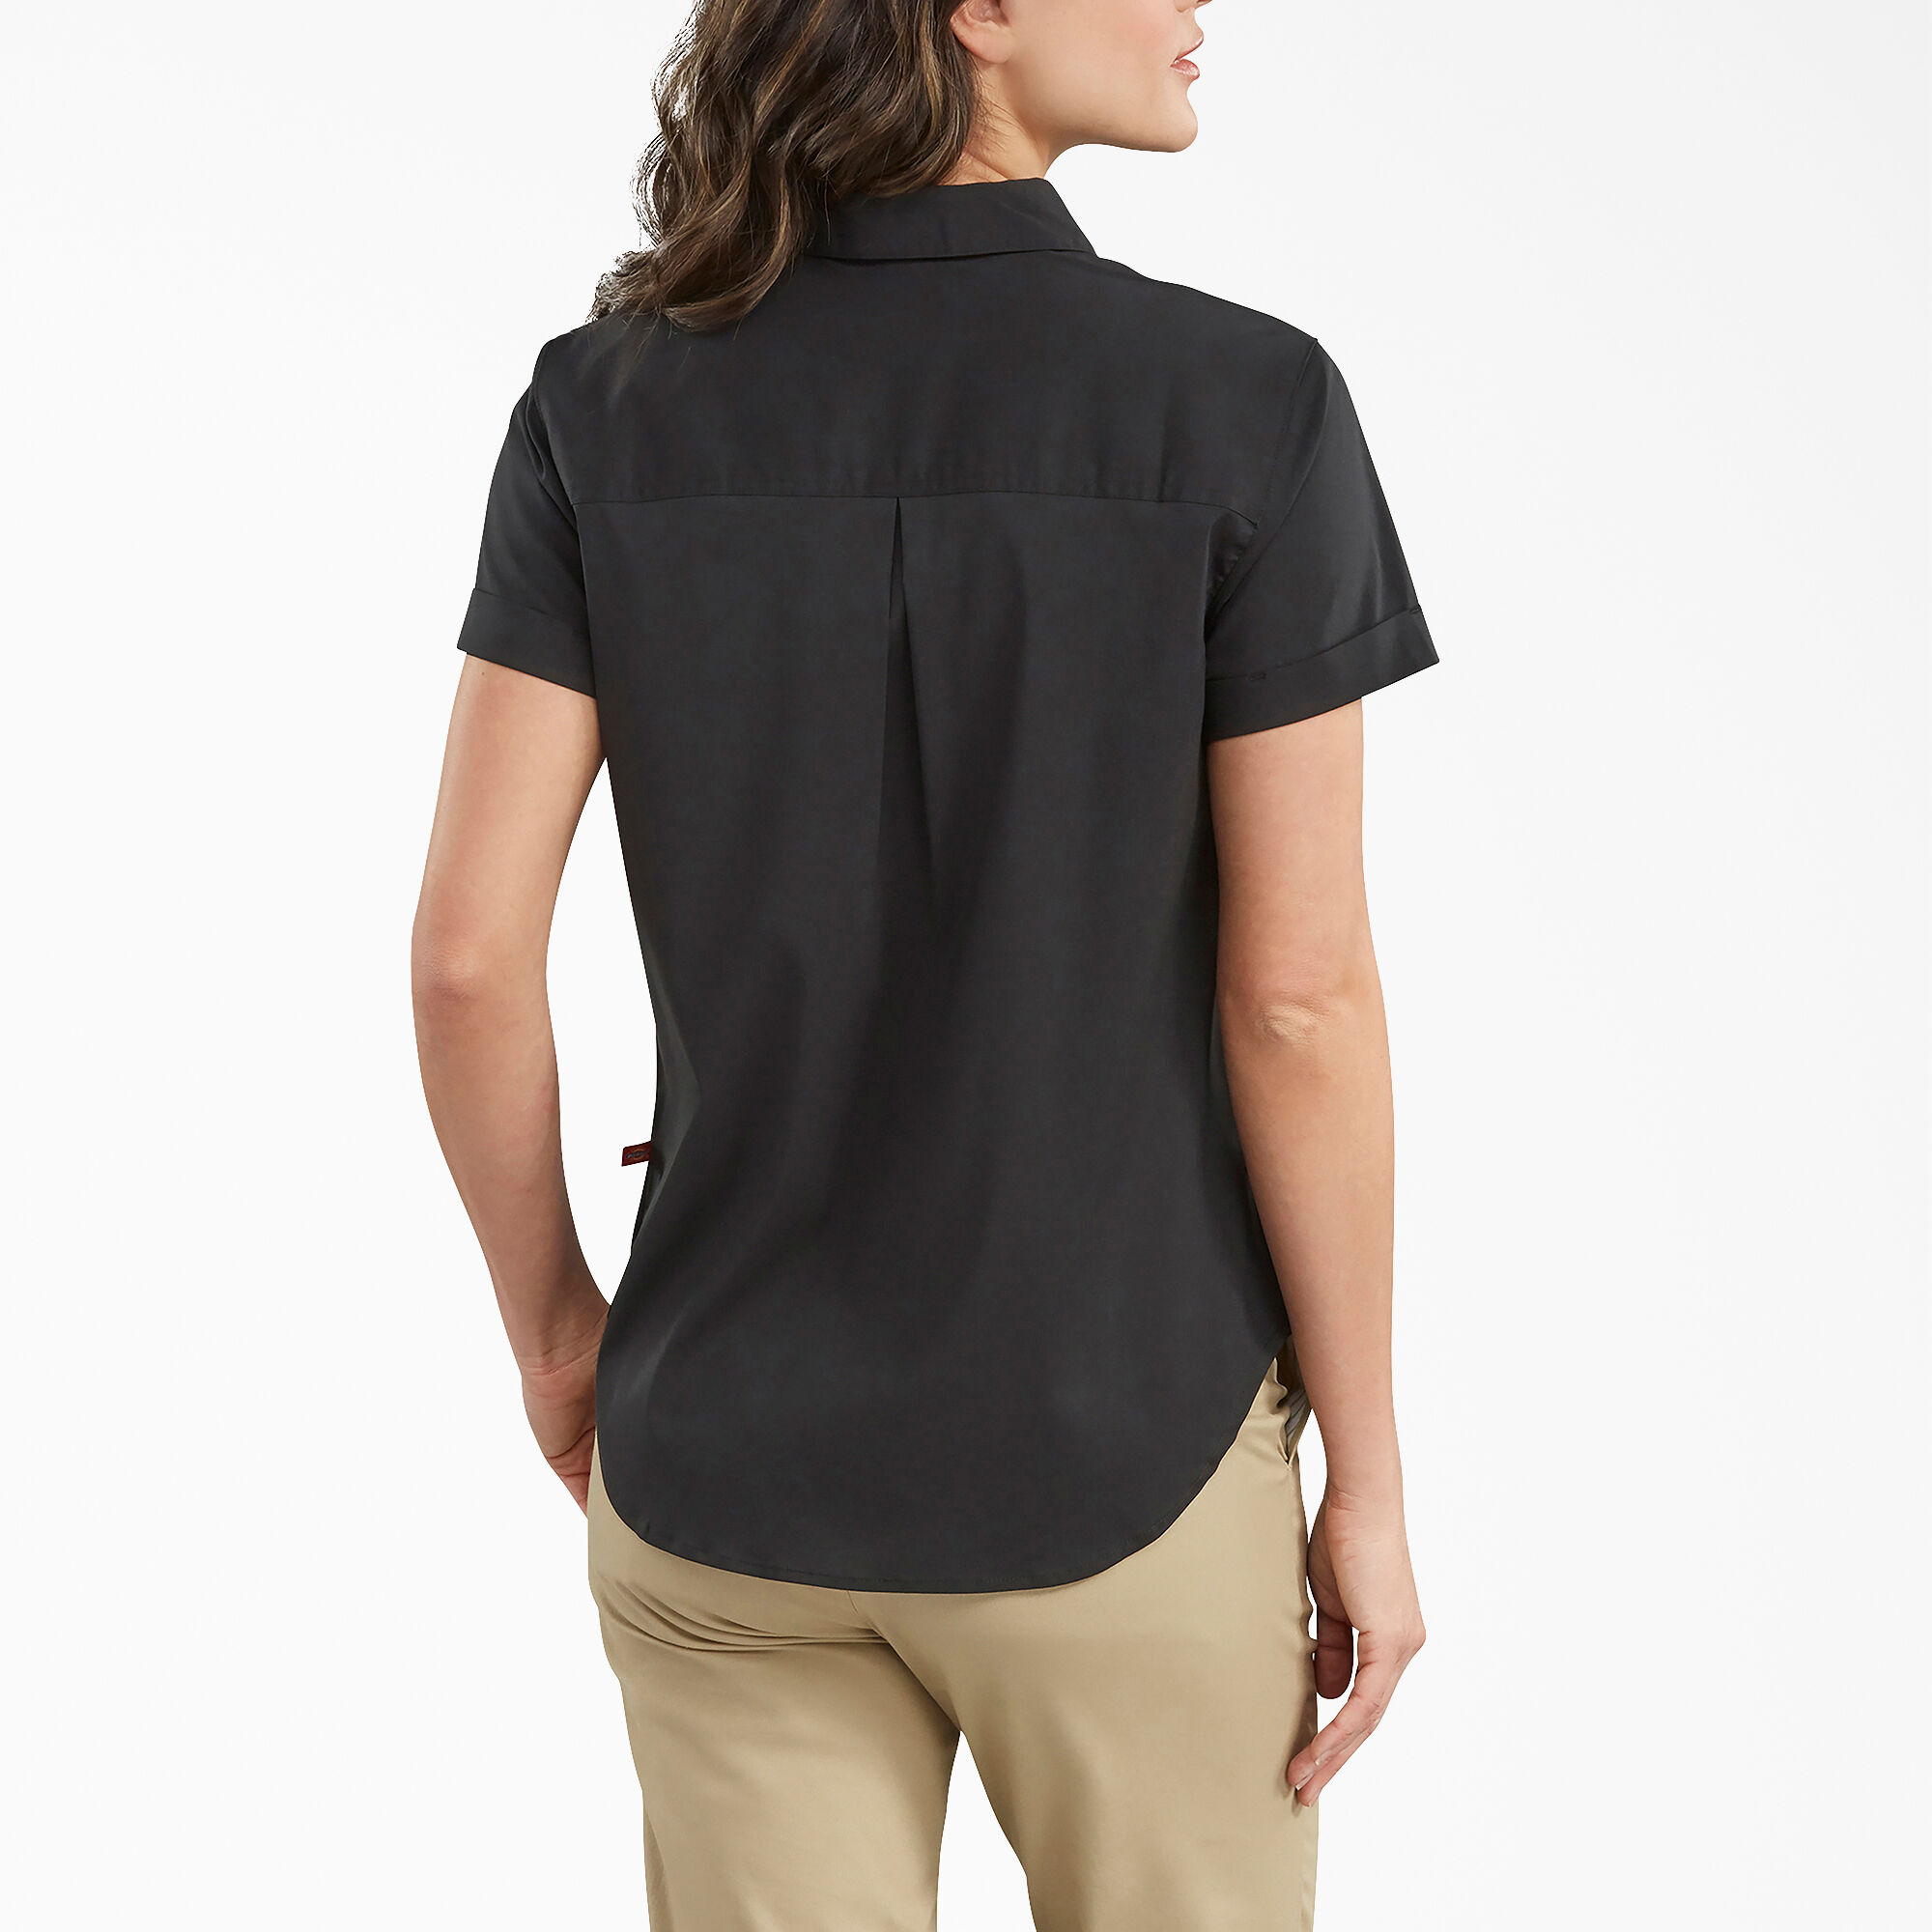 Women's Button-Up Shirt - Dickies US